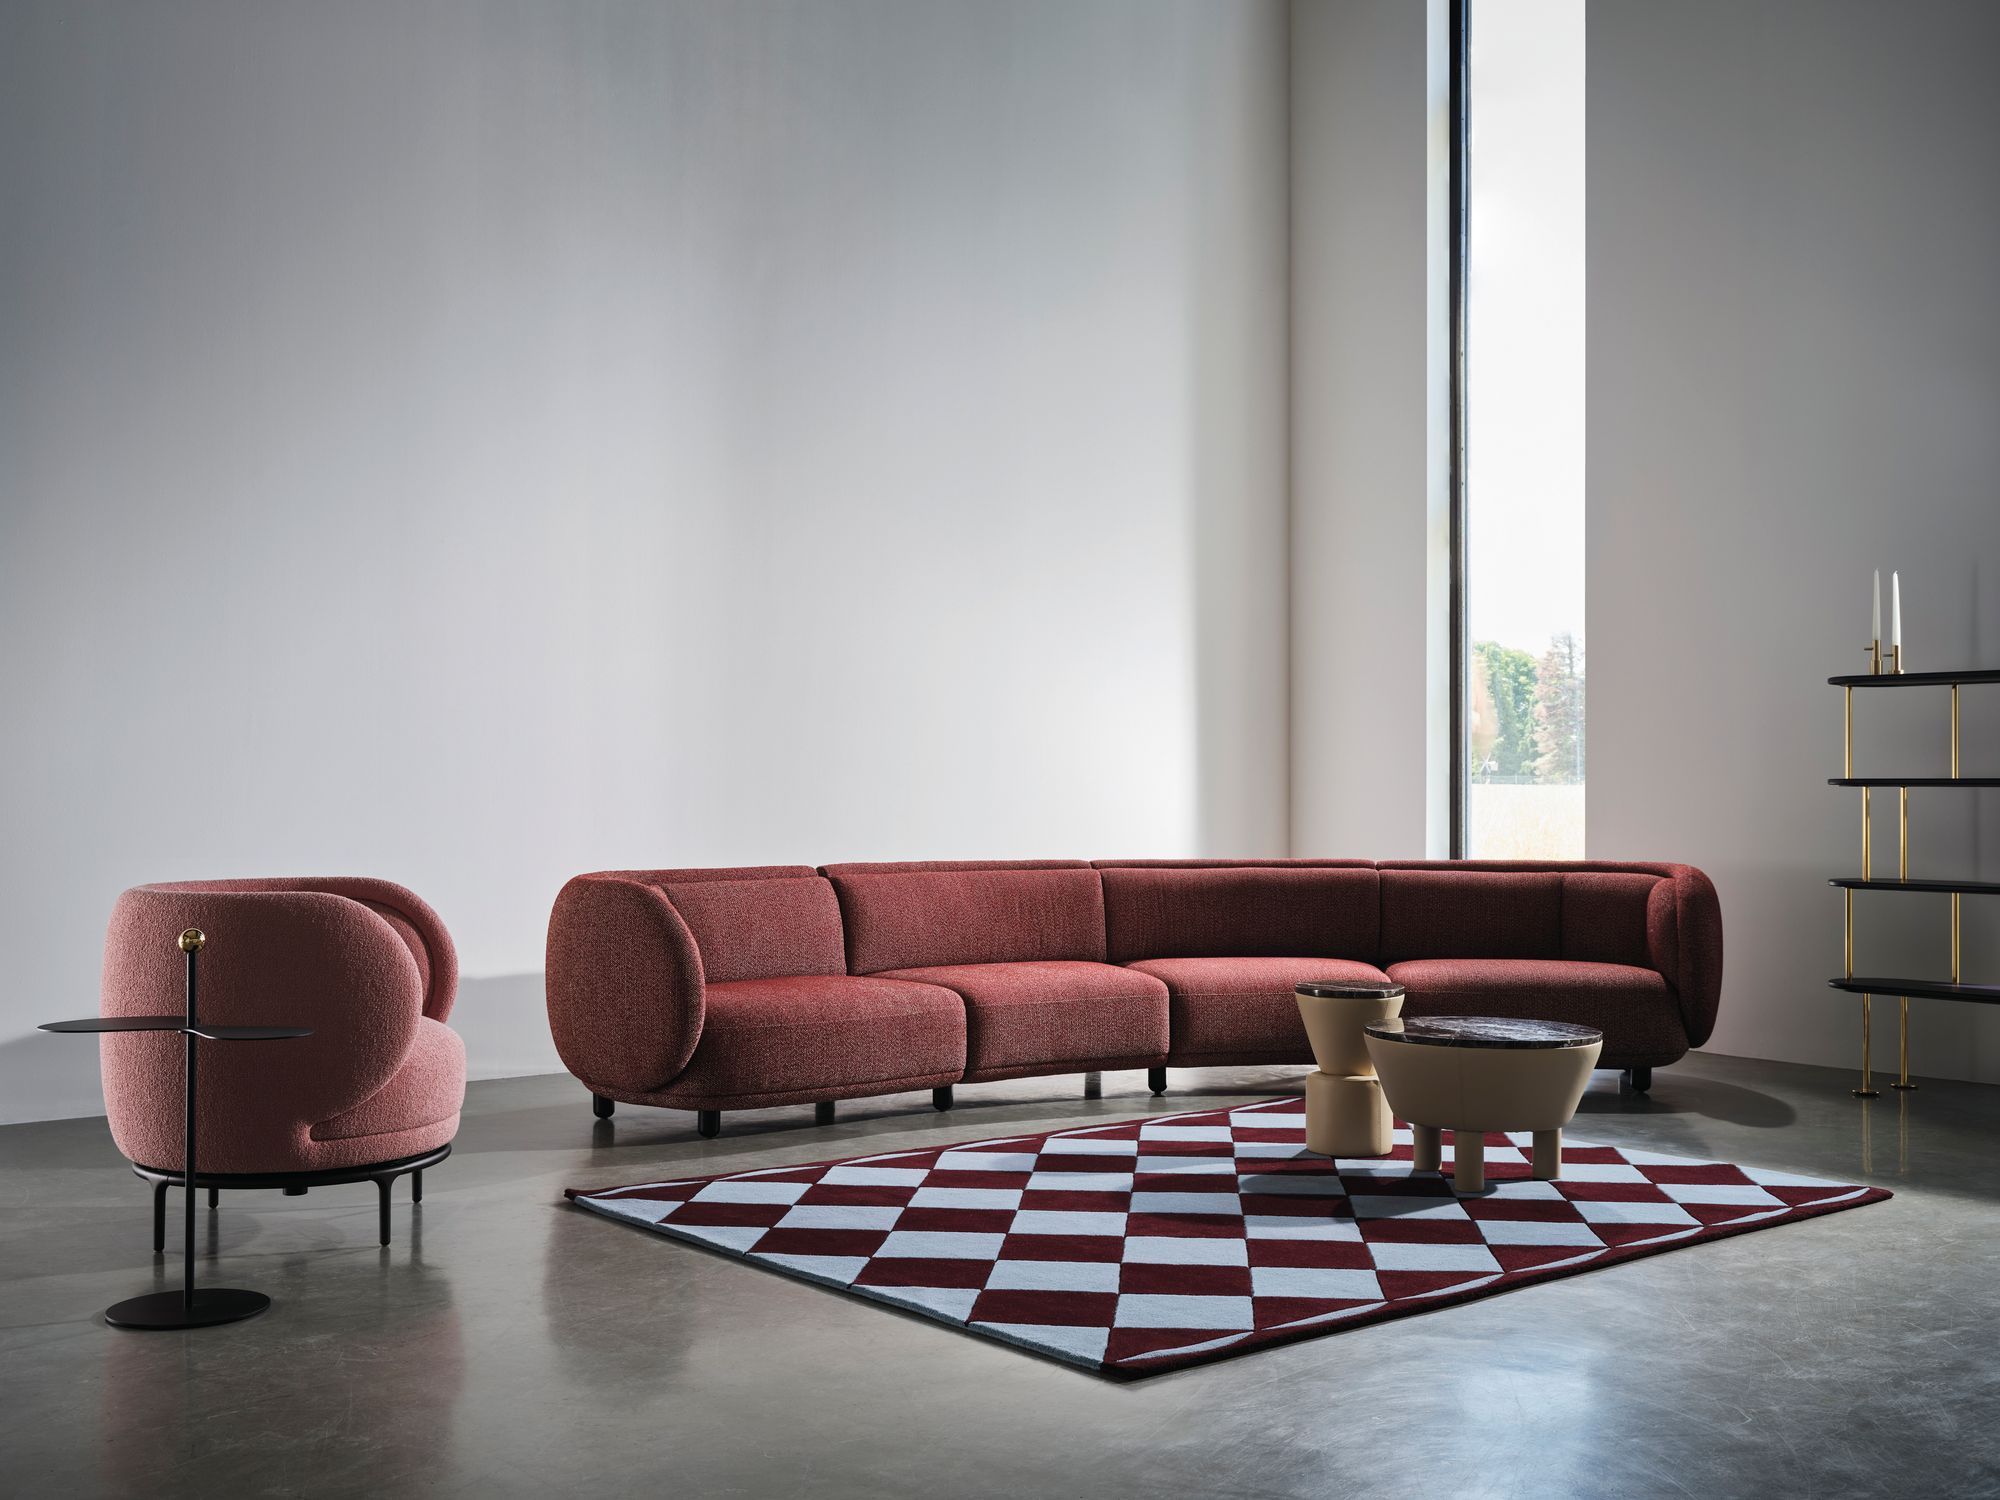 nuevo sofá de diseño, sofá modular granate, sofá Vuelta de Wittmann